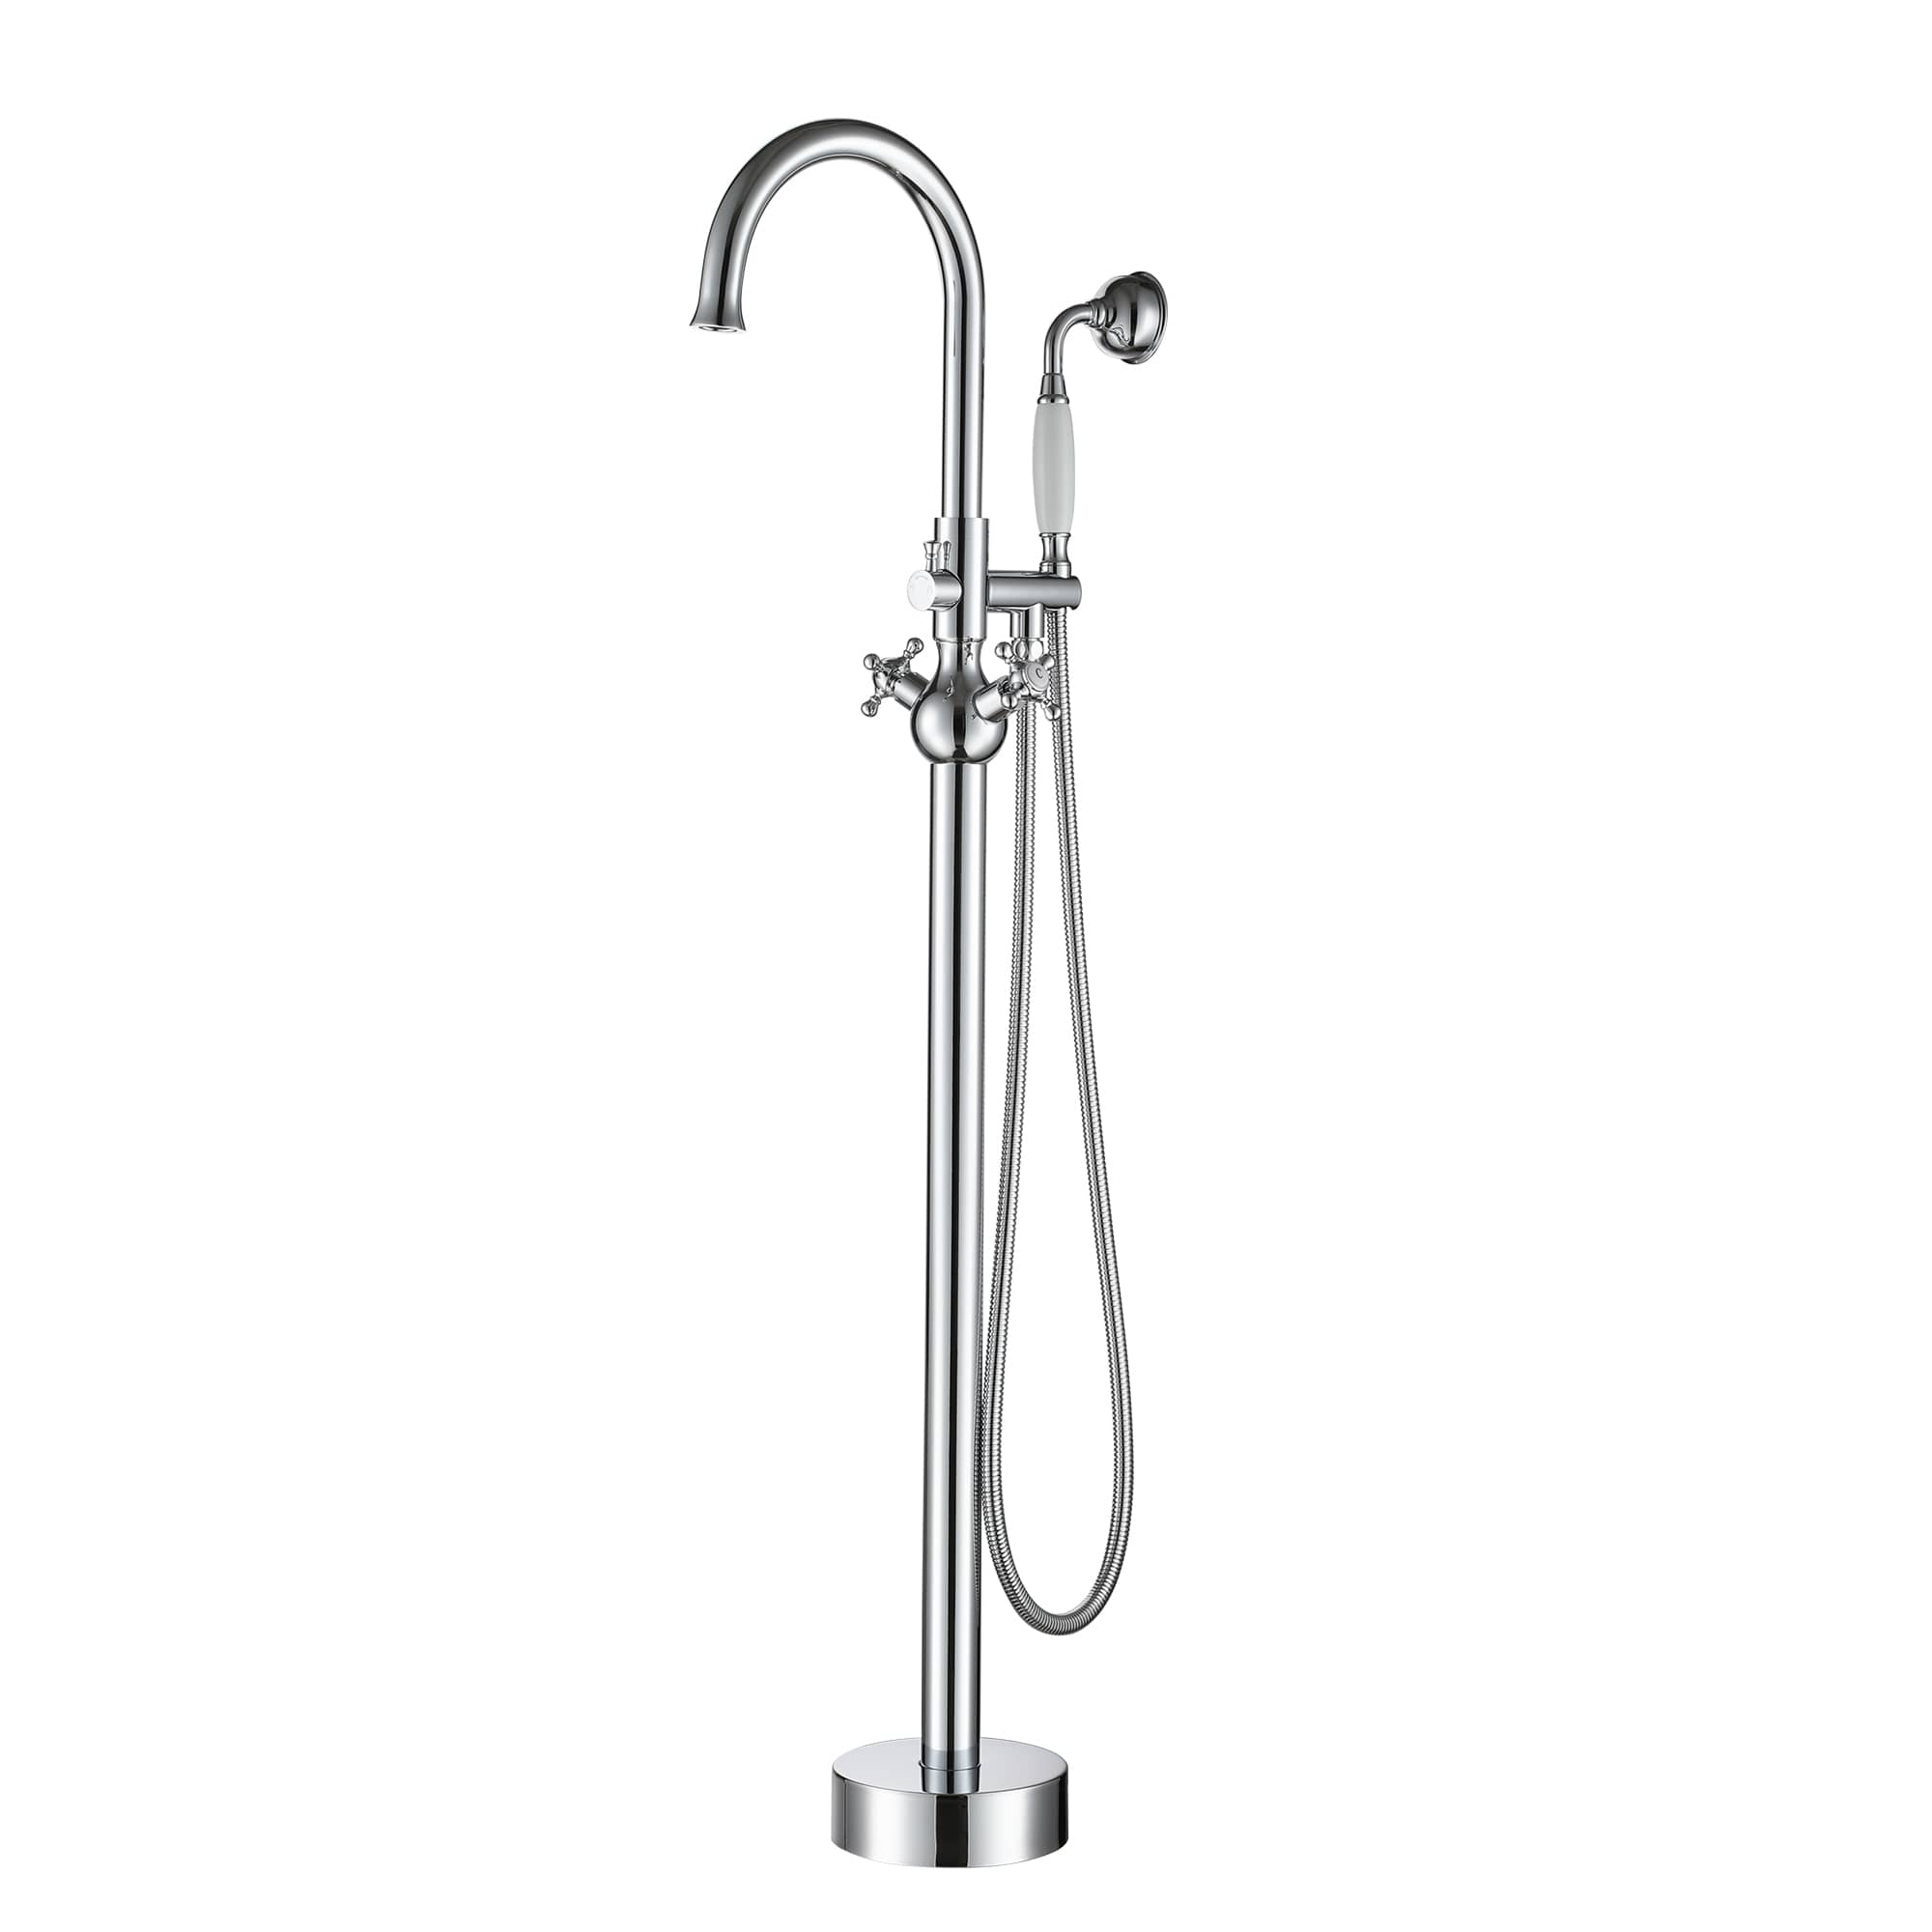 Casainc Multiple Color 2-Handle Residential Freestanding Bathtub Faucet with Hand Shower